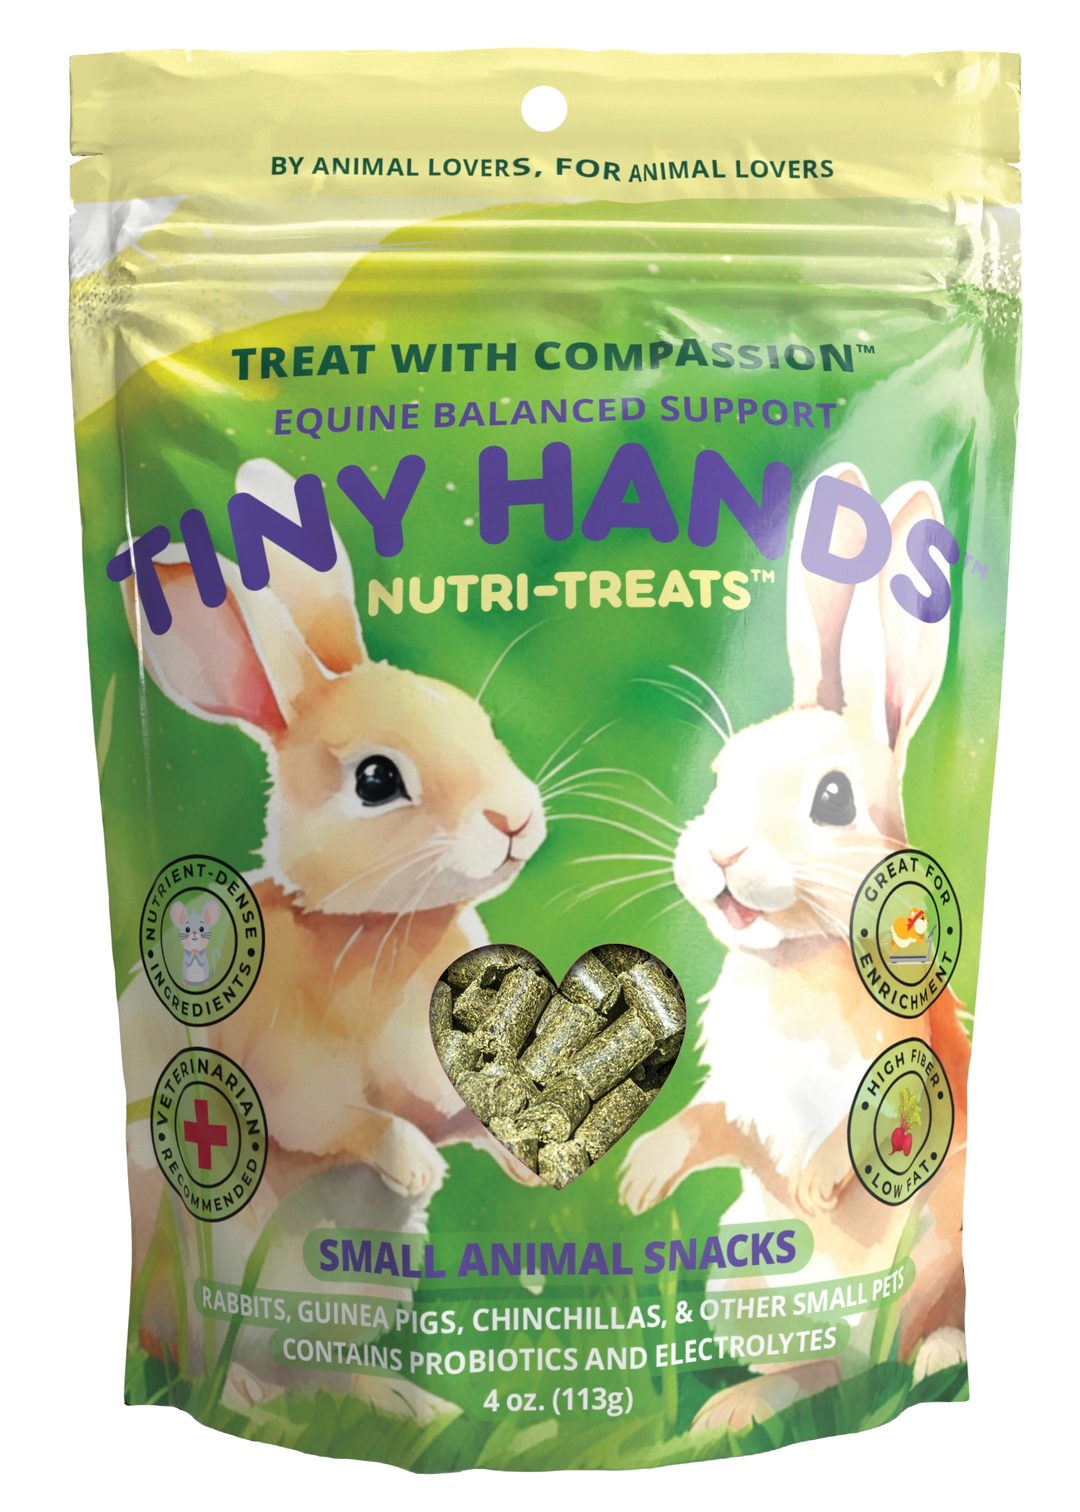 Tiny Hands Nutri-Bites (4 oz) - Small Animal Treats Label. Ingredients, Nutritional Information, Healthy Snacks, Nutrient-Rich Treats for Small Animals, High Fiber, Low Fat Small Animal Treats